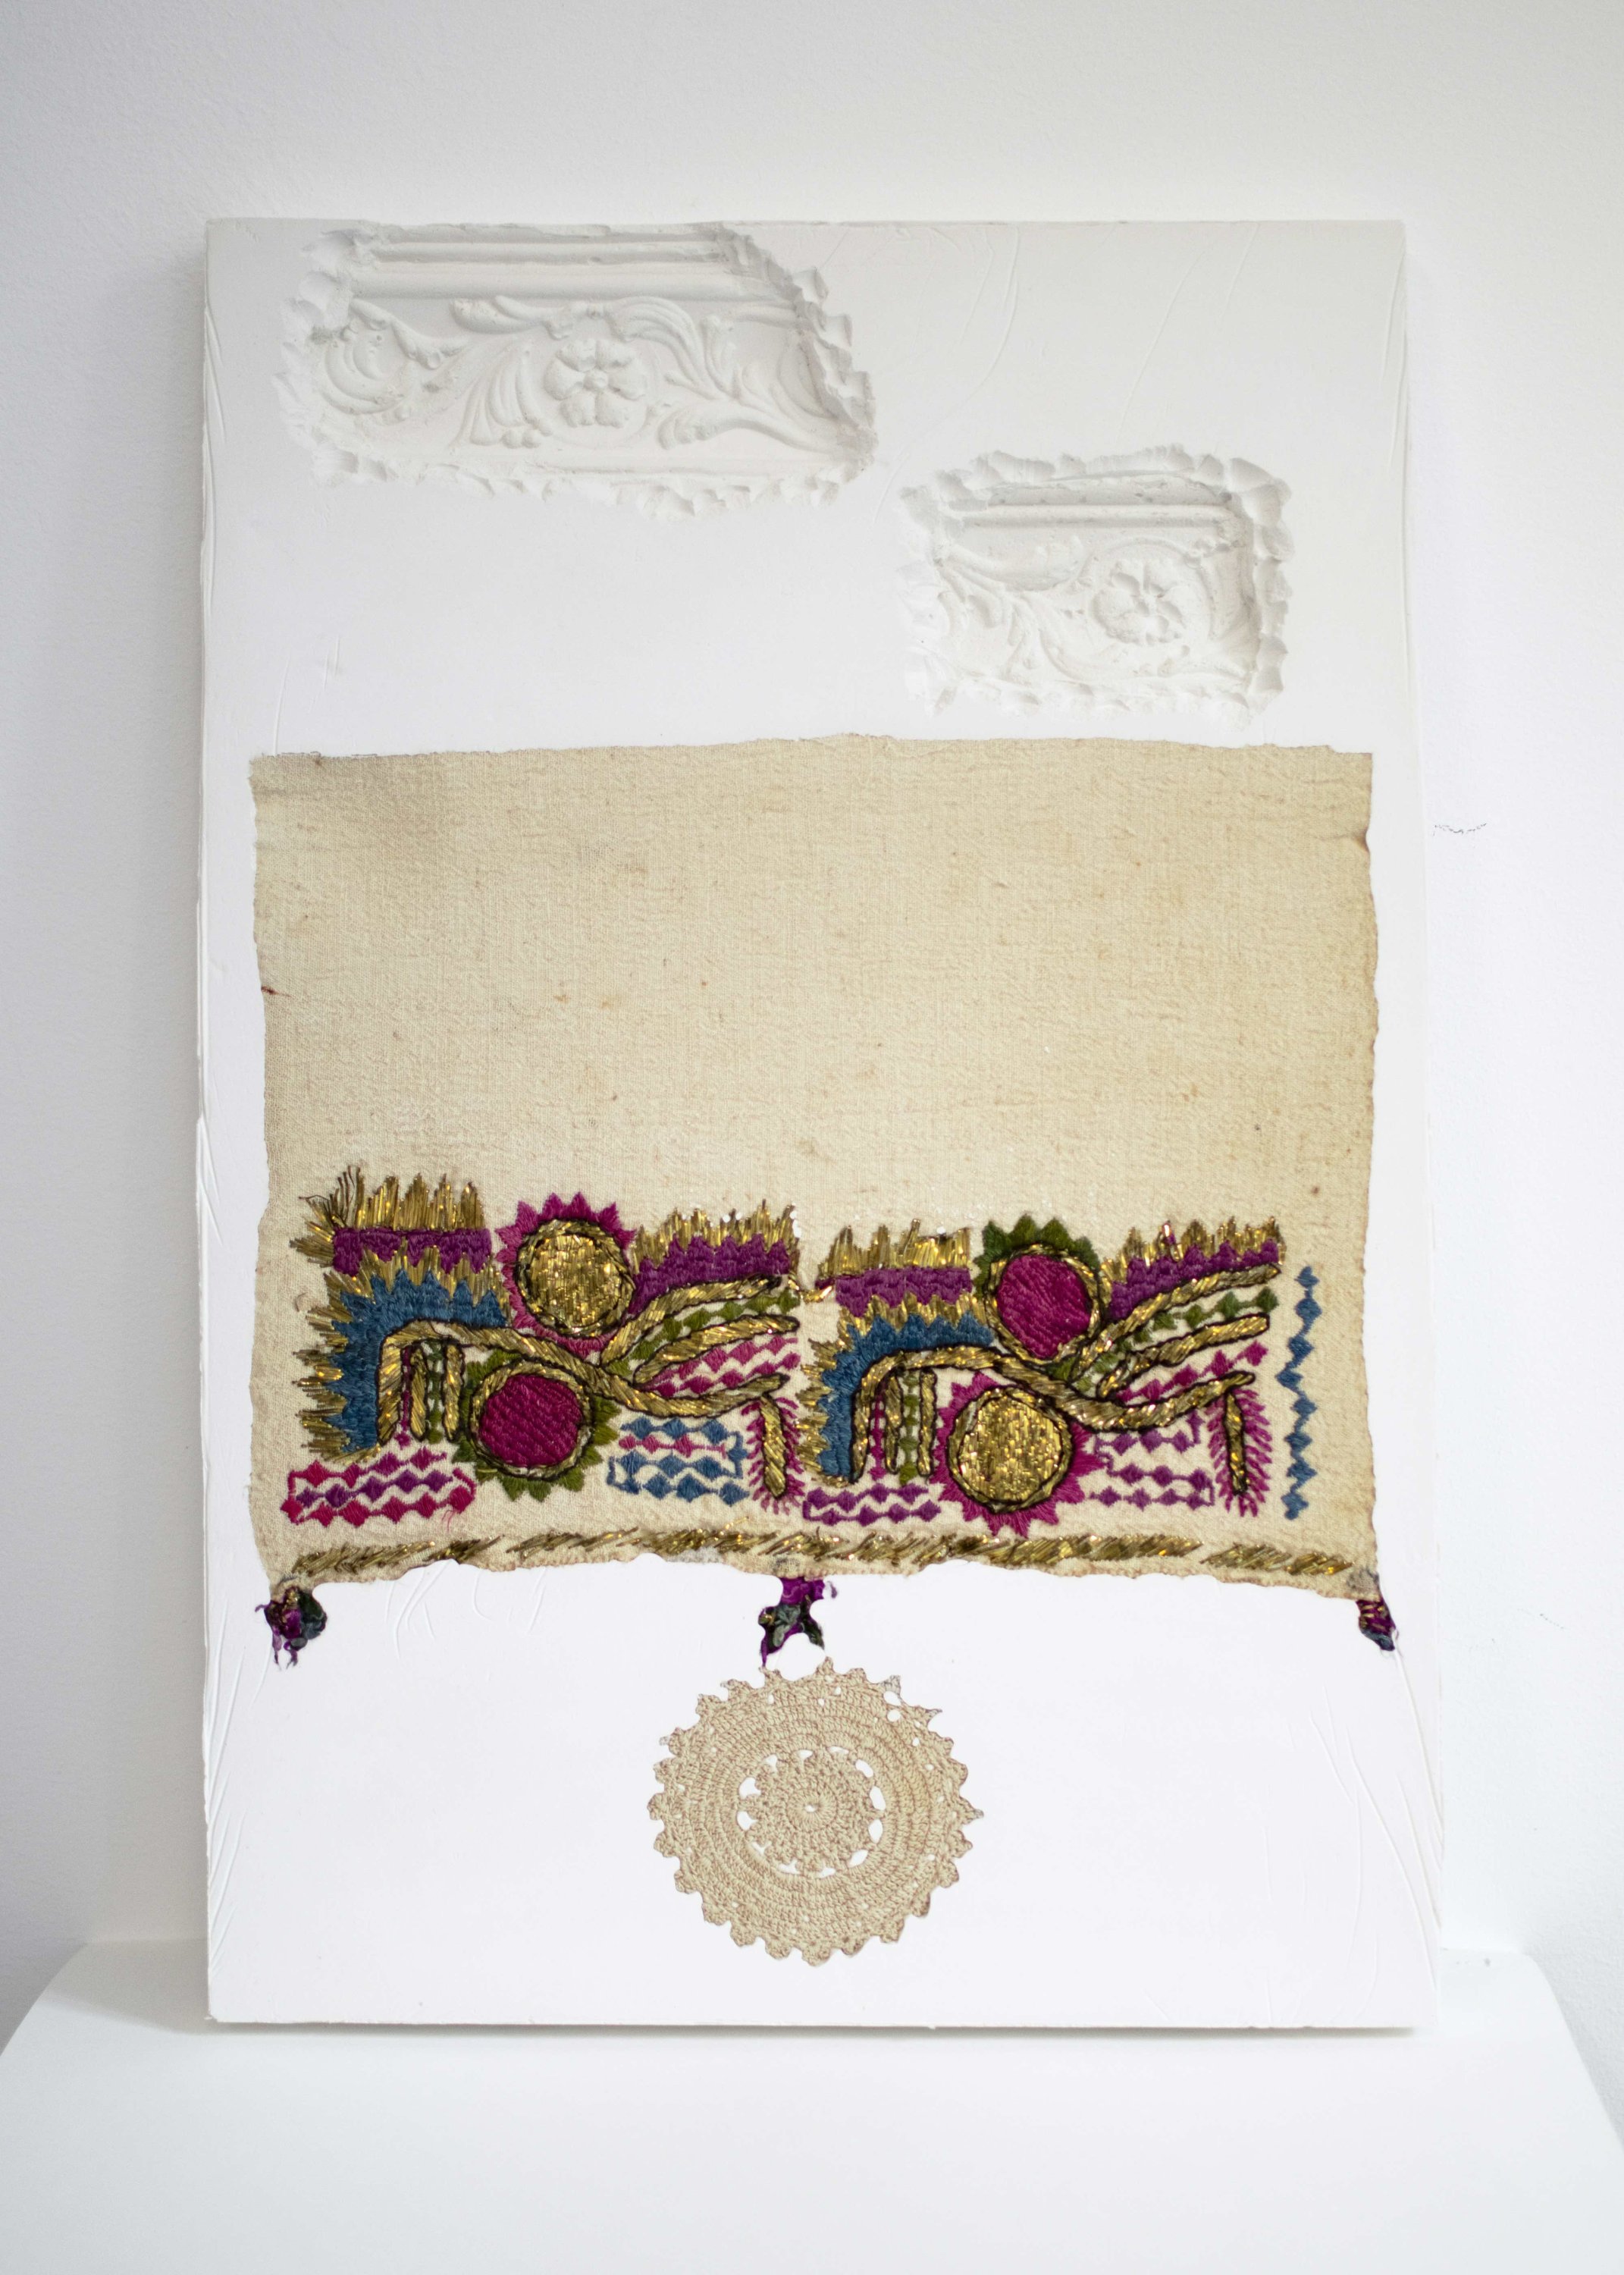 Ekin Su Koç, "Altbau I," fabric, lace and plaster, 30 by 35 centimeters, 2020. (Courtesy of Anna Laudel)